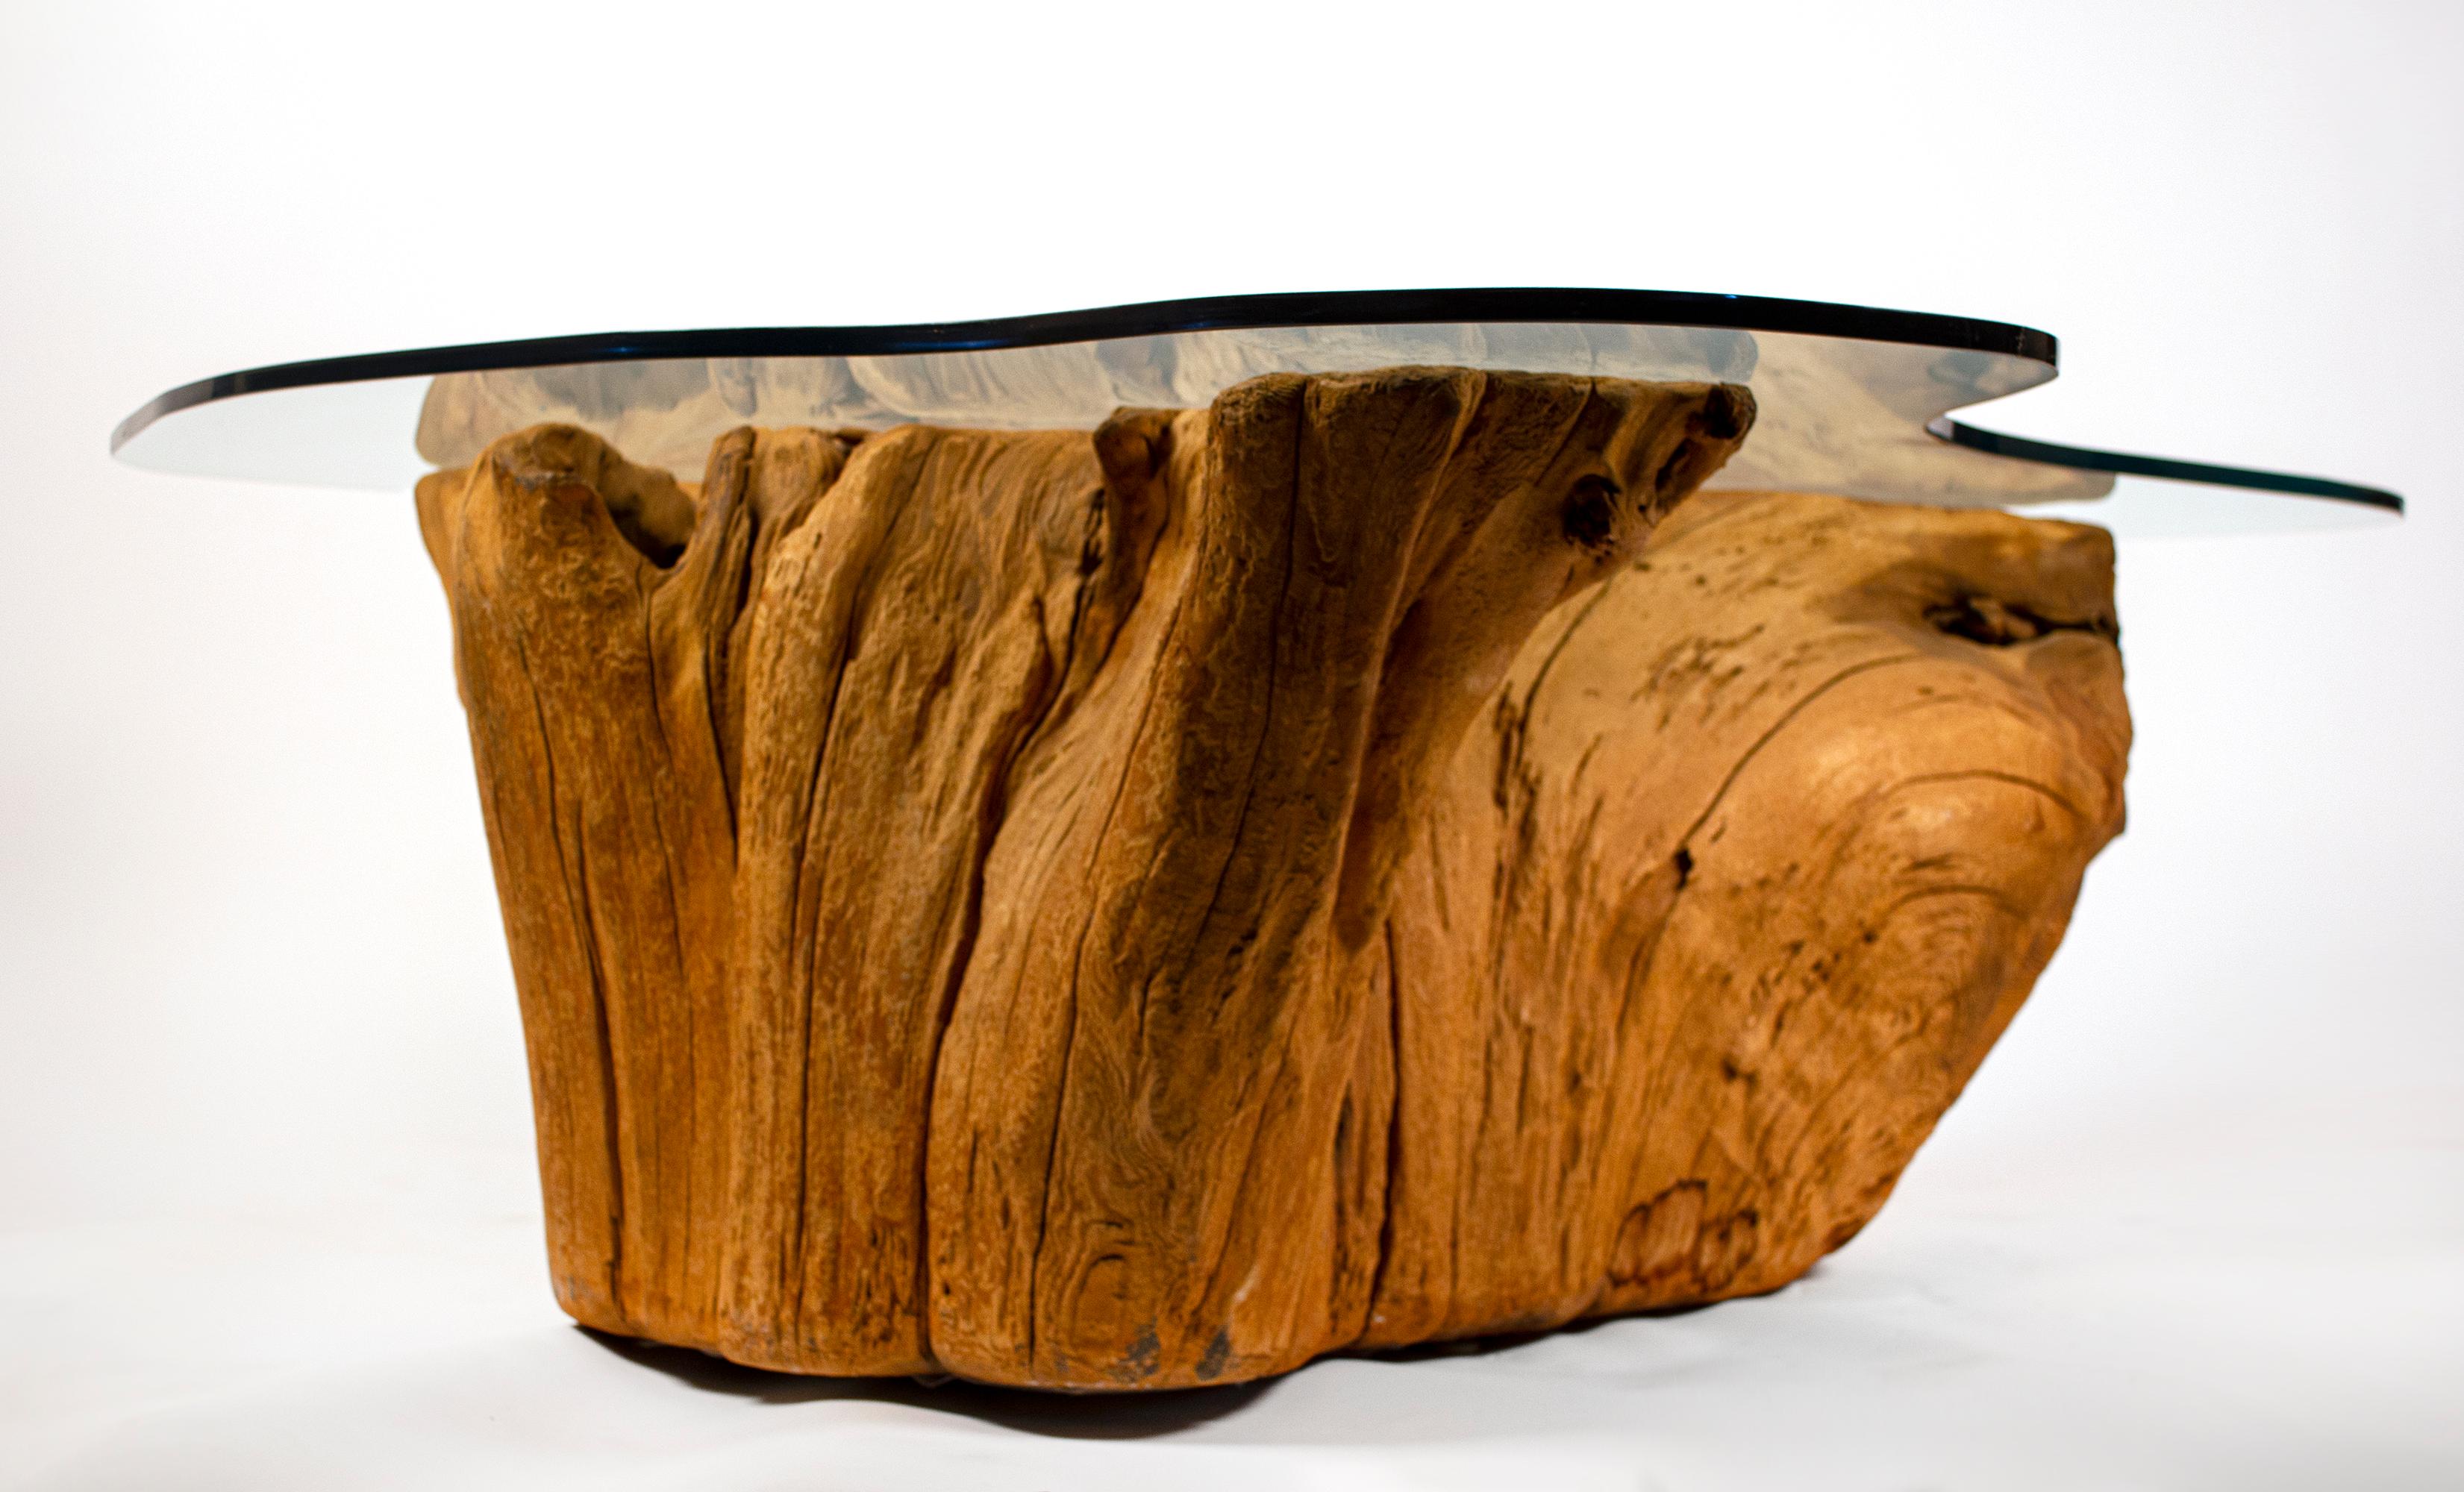 20th Century Modern Cypress Tree Trunk Coffee Table 1970s Sandblasted Organic Freeform Design